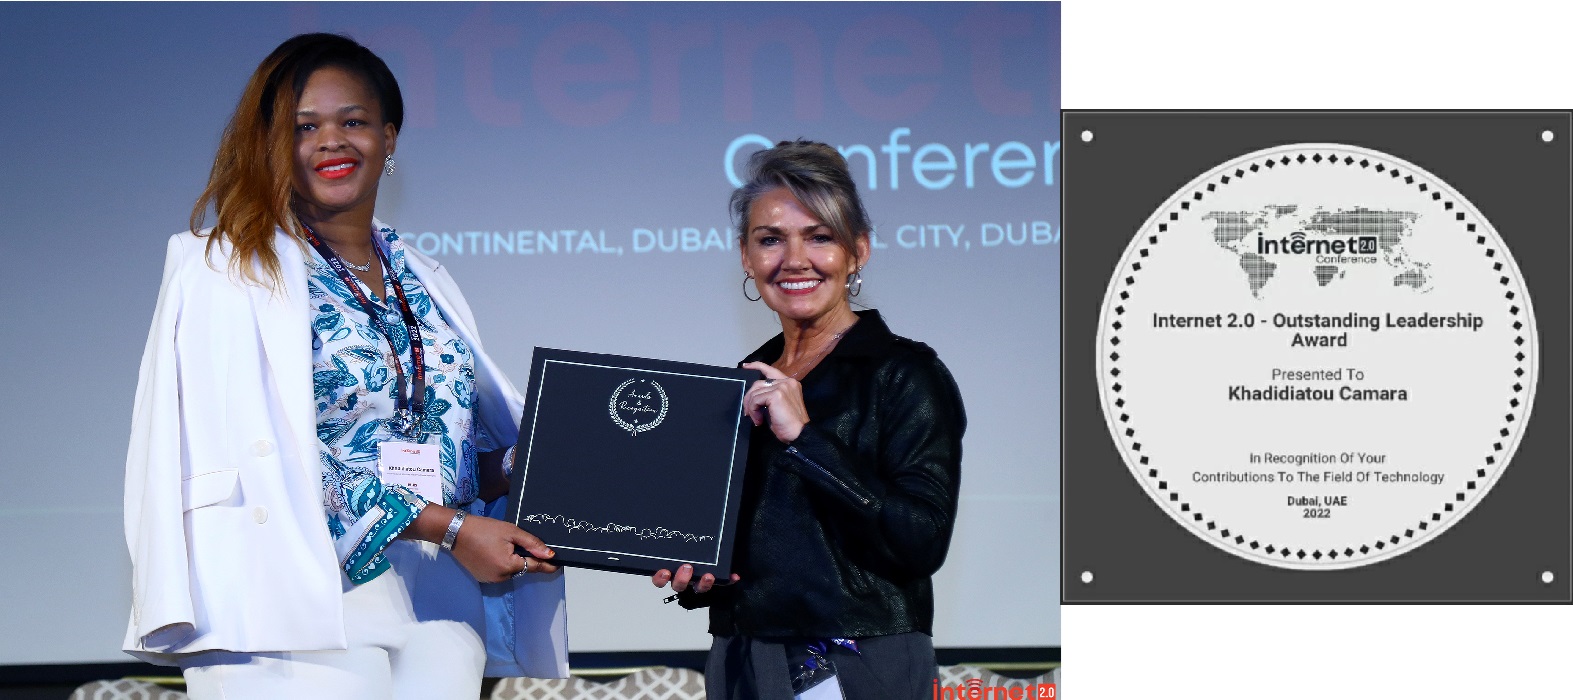 Khadidiatou CAMARA receives the Outstanding Leadership Award at Conference Internet 2.0 in Dubai 2021